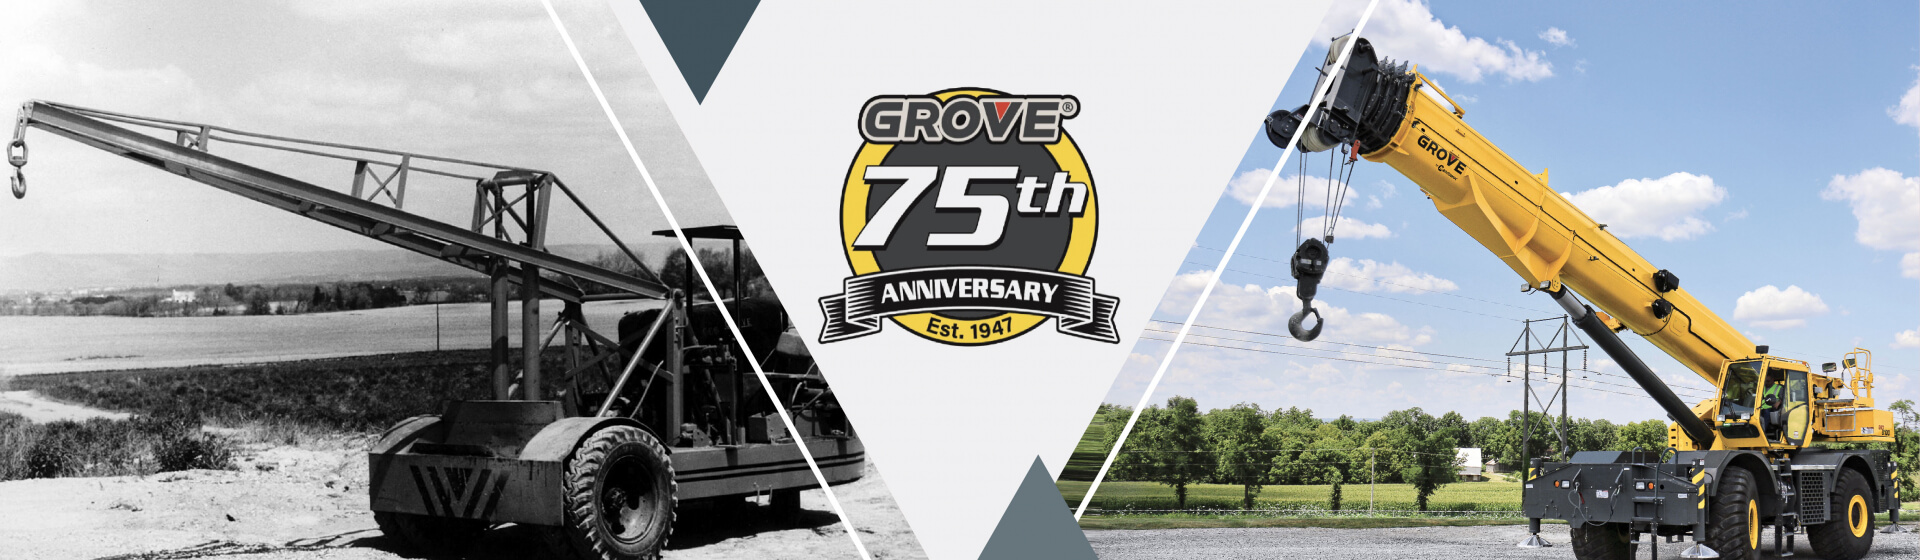 Historic-milestone-Grove-celebrates-its-75th-anniversary.jpg